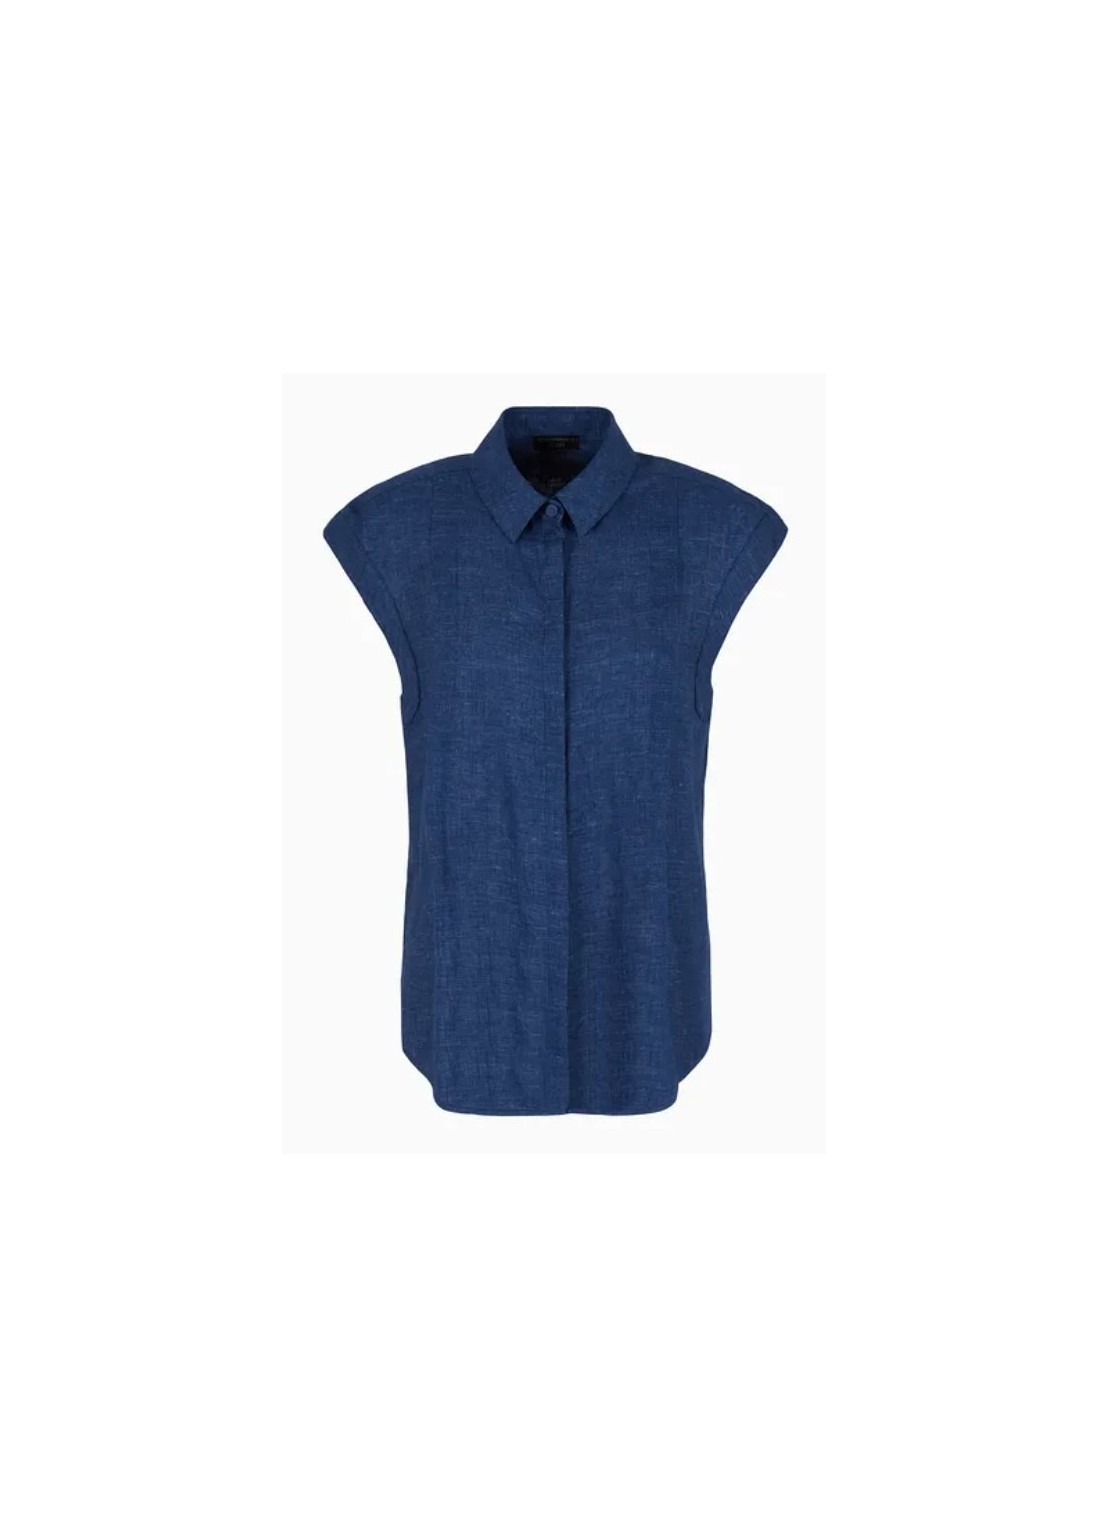 Camiseria emporio armani shirt woman shirt e3nc16f2017 900 talla Azul
 